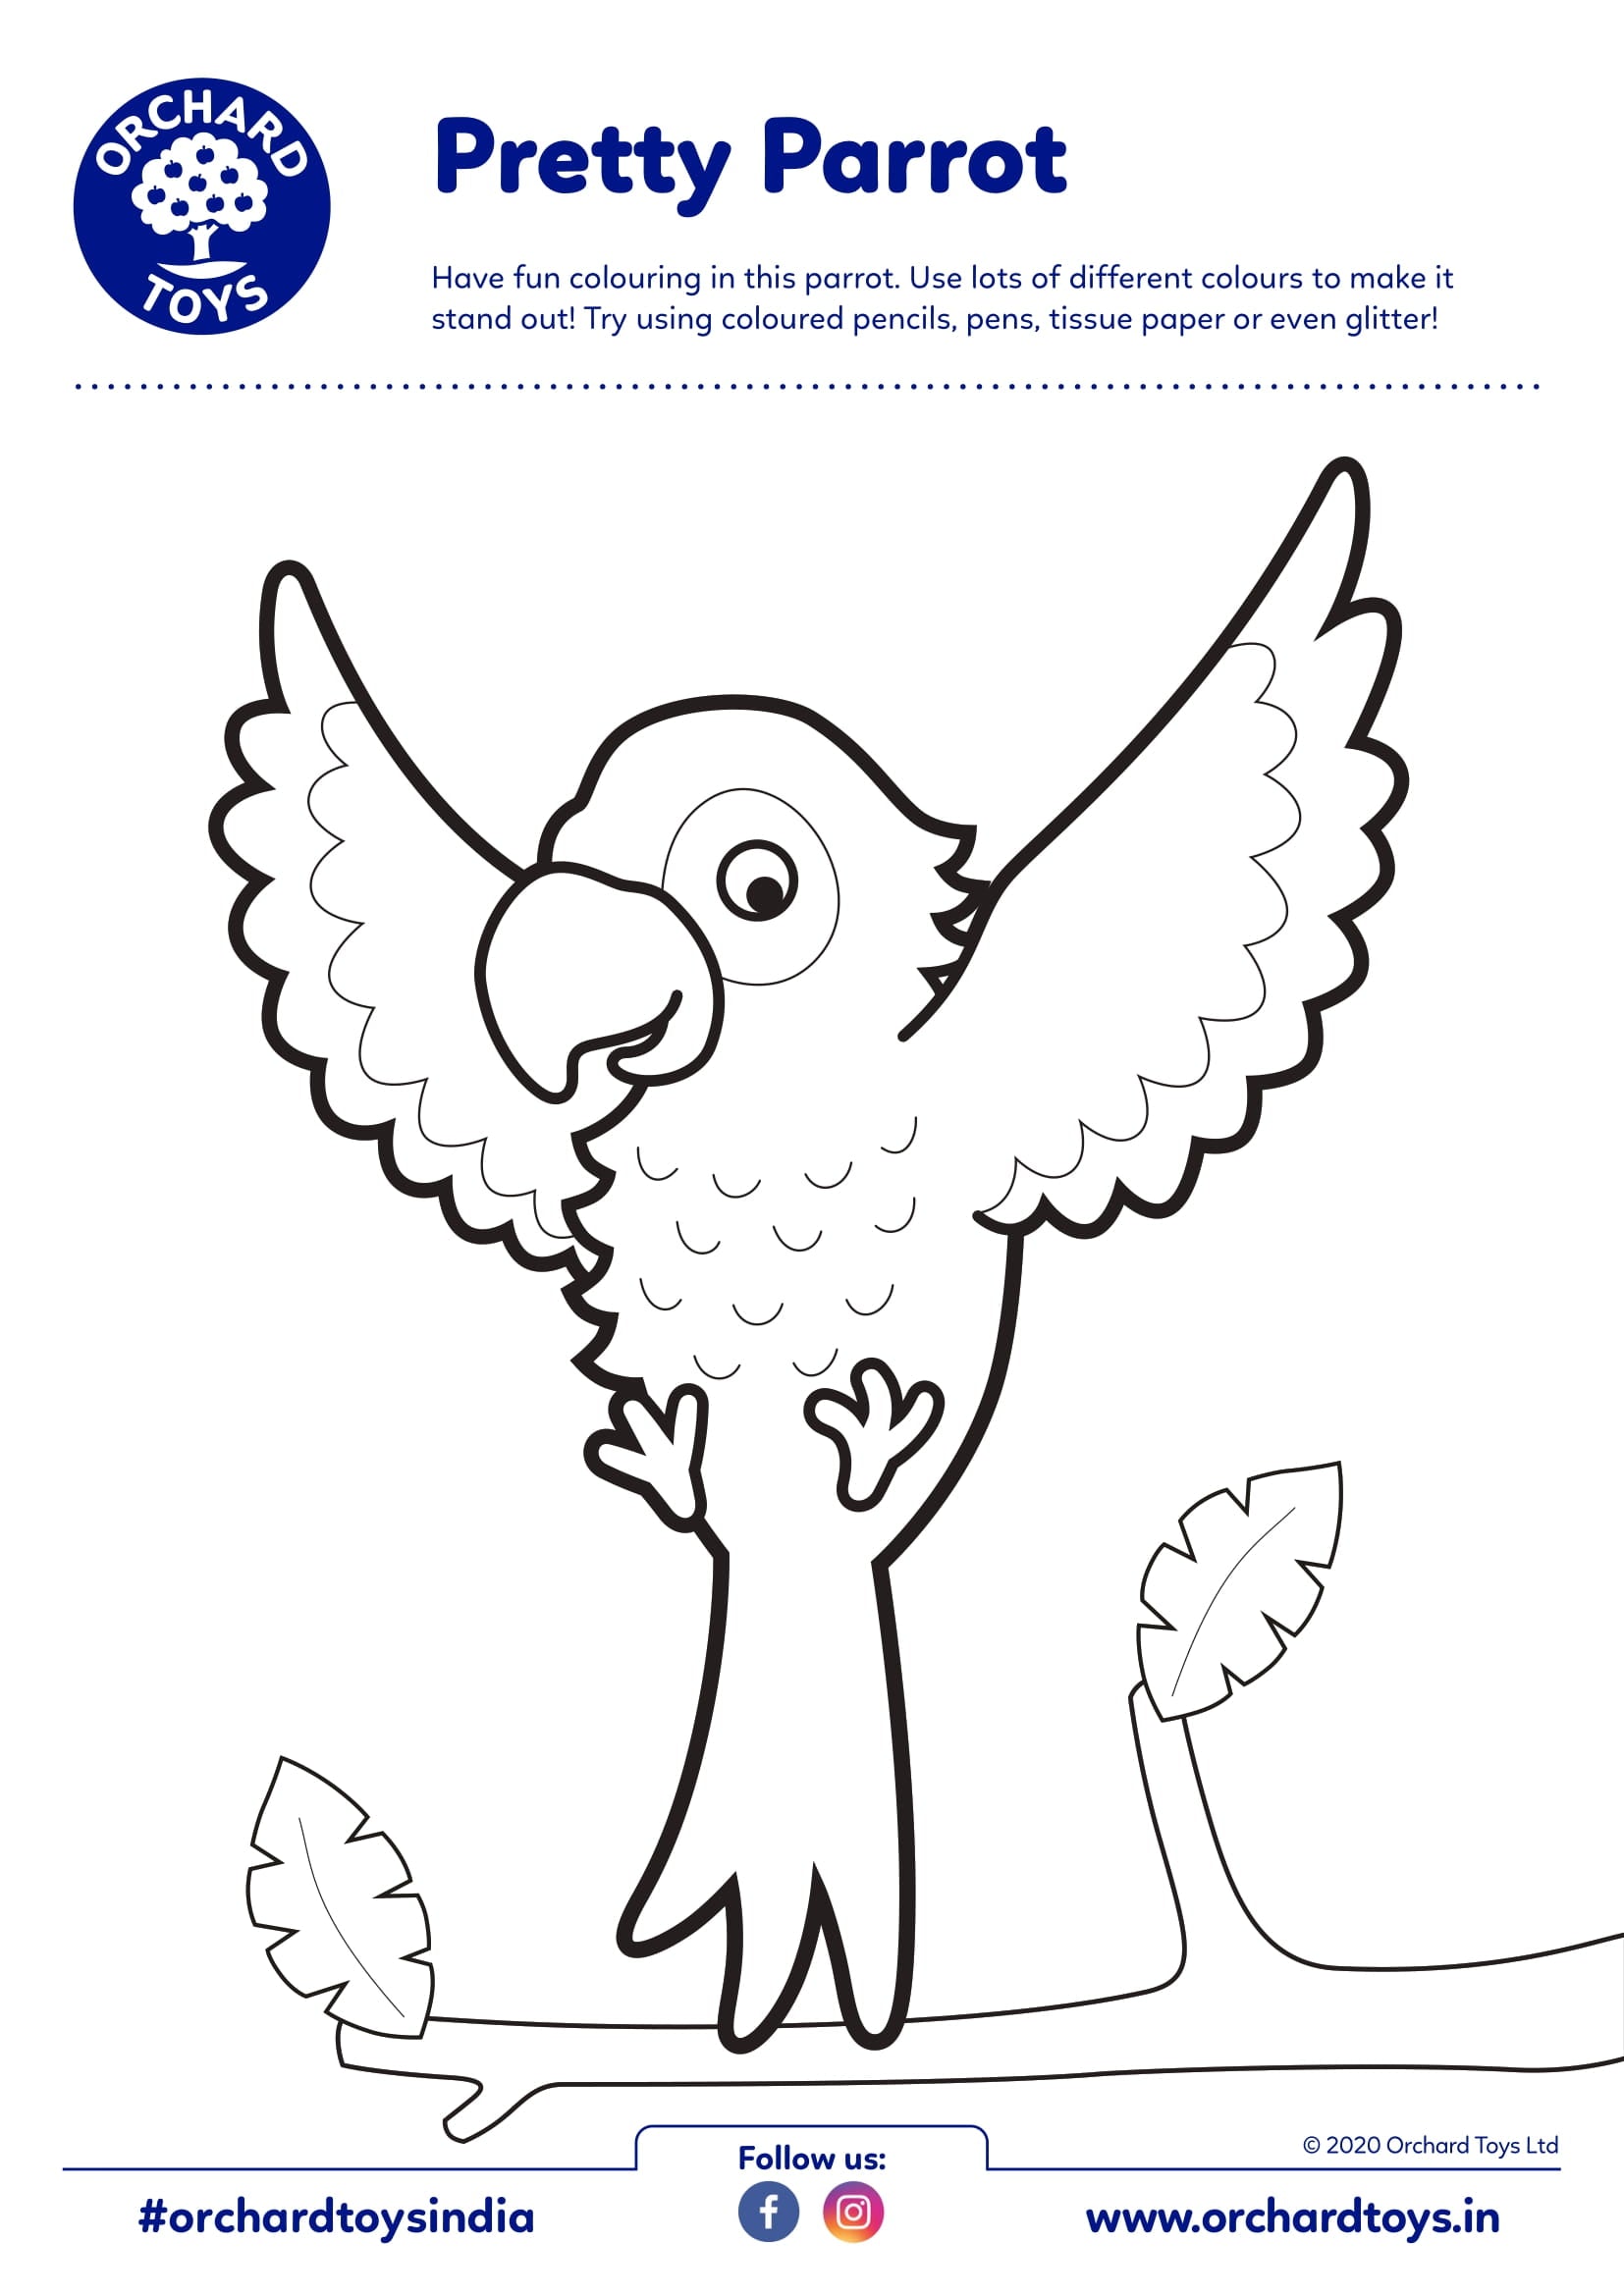 Parrot Activity Coloring Sheet